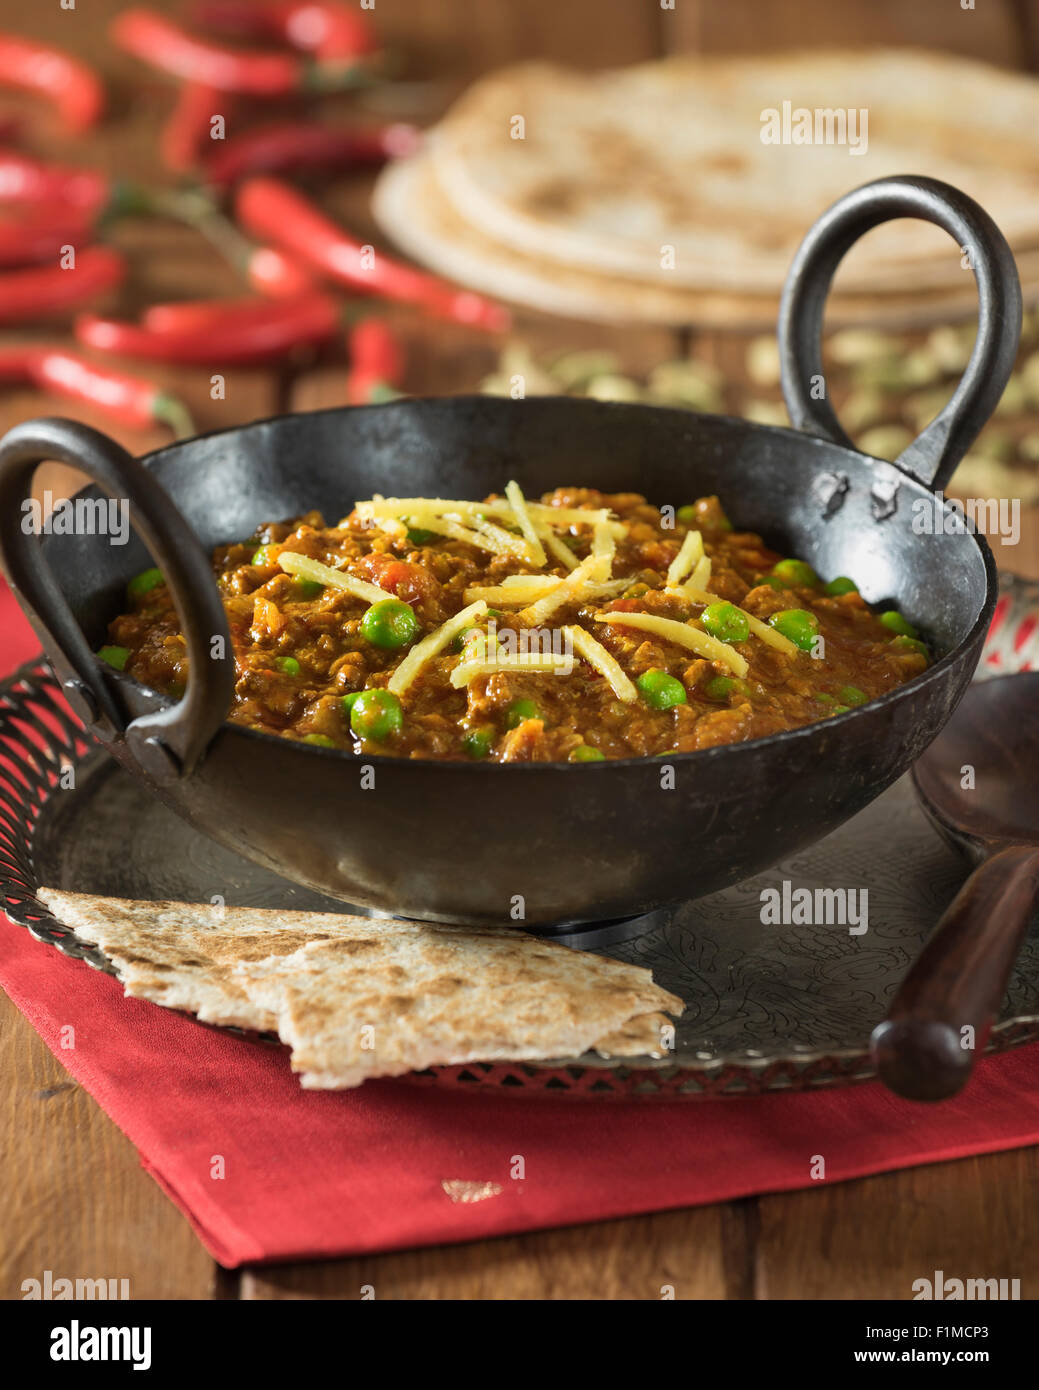 Keema curry. Spicy minced lamb in karahi cooking pot. India Food Stock Photo